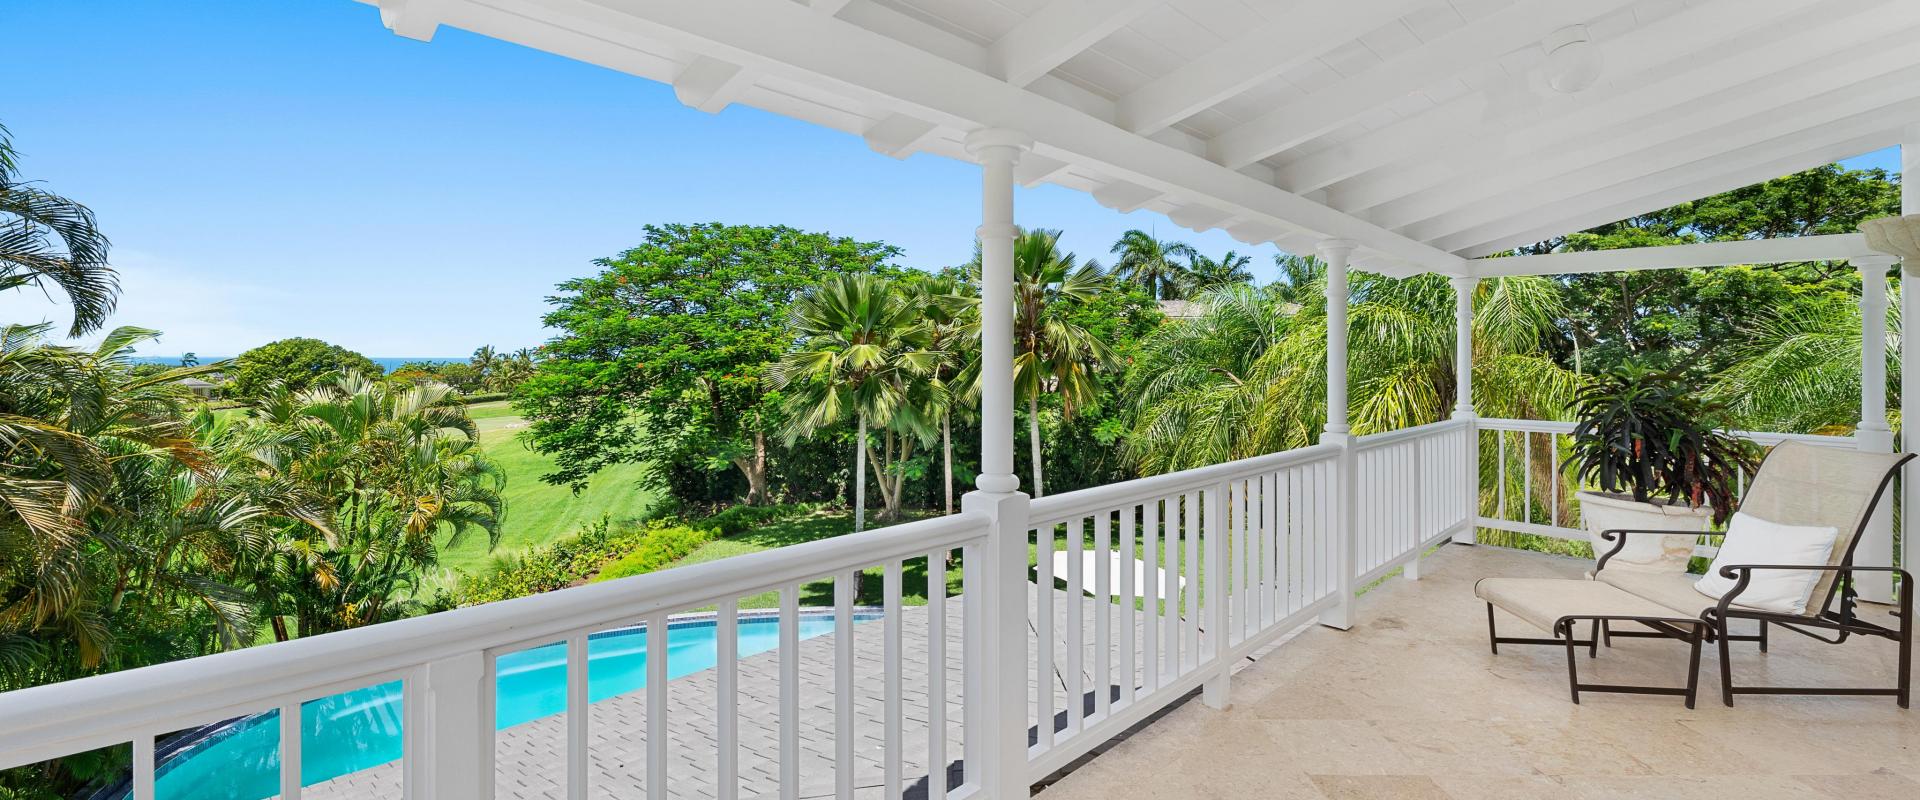 Villa Rosa Holiday Rental Villa In Royal Westmoreland Barbados Master Bedroom Patio with Pool and Golf Course View